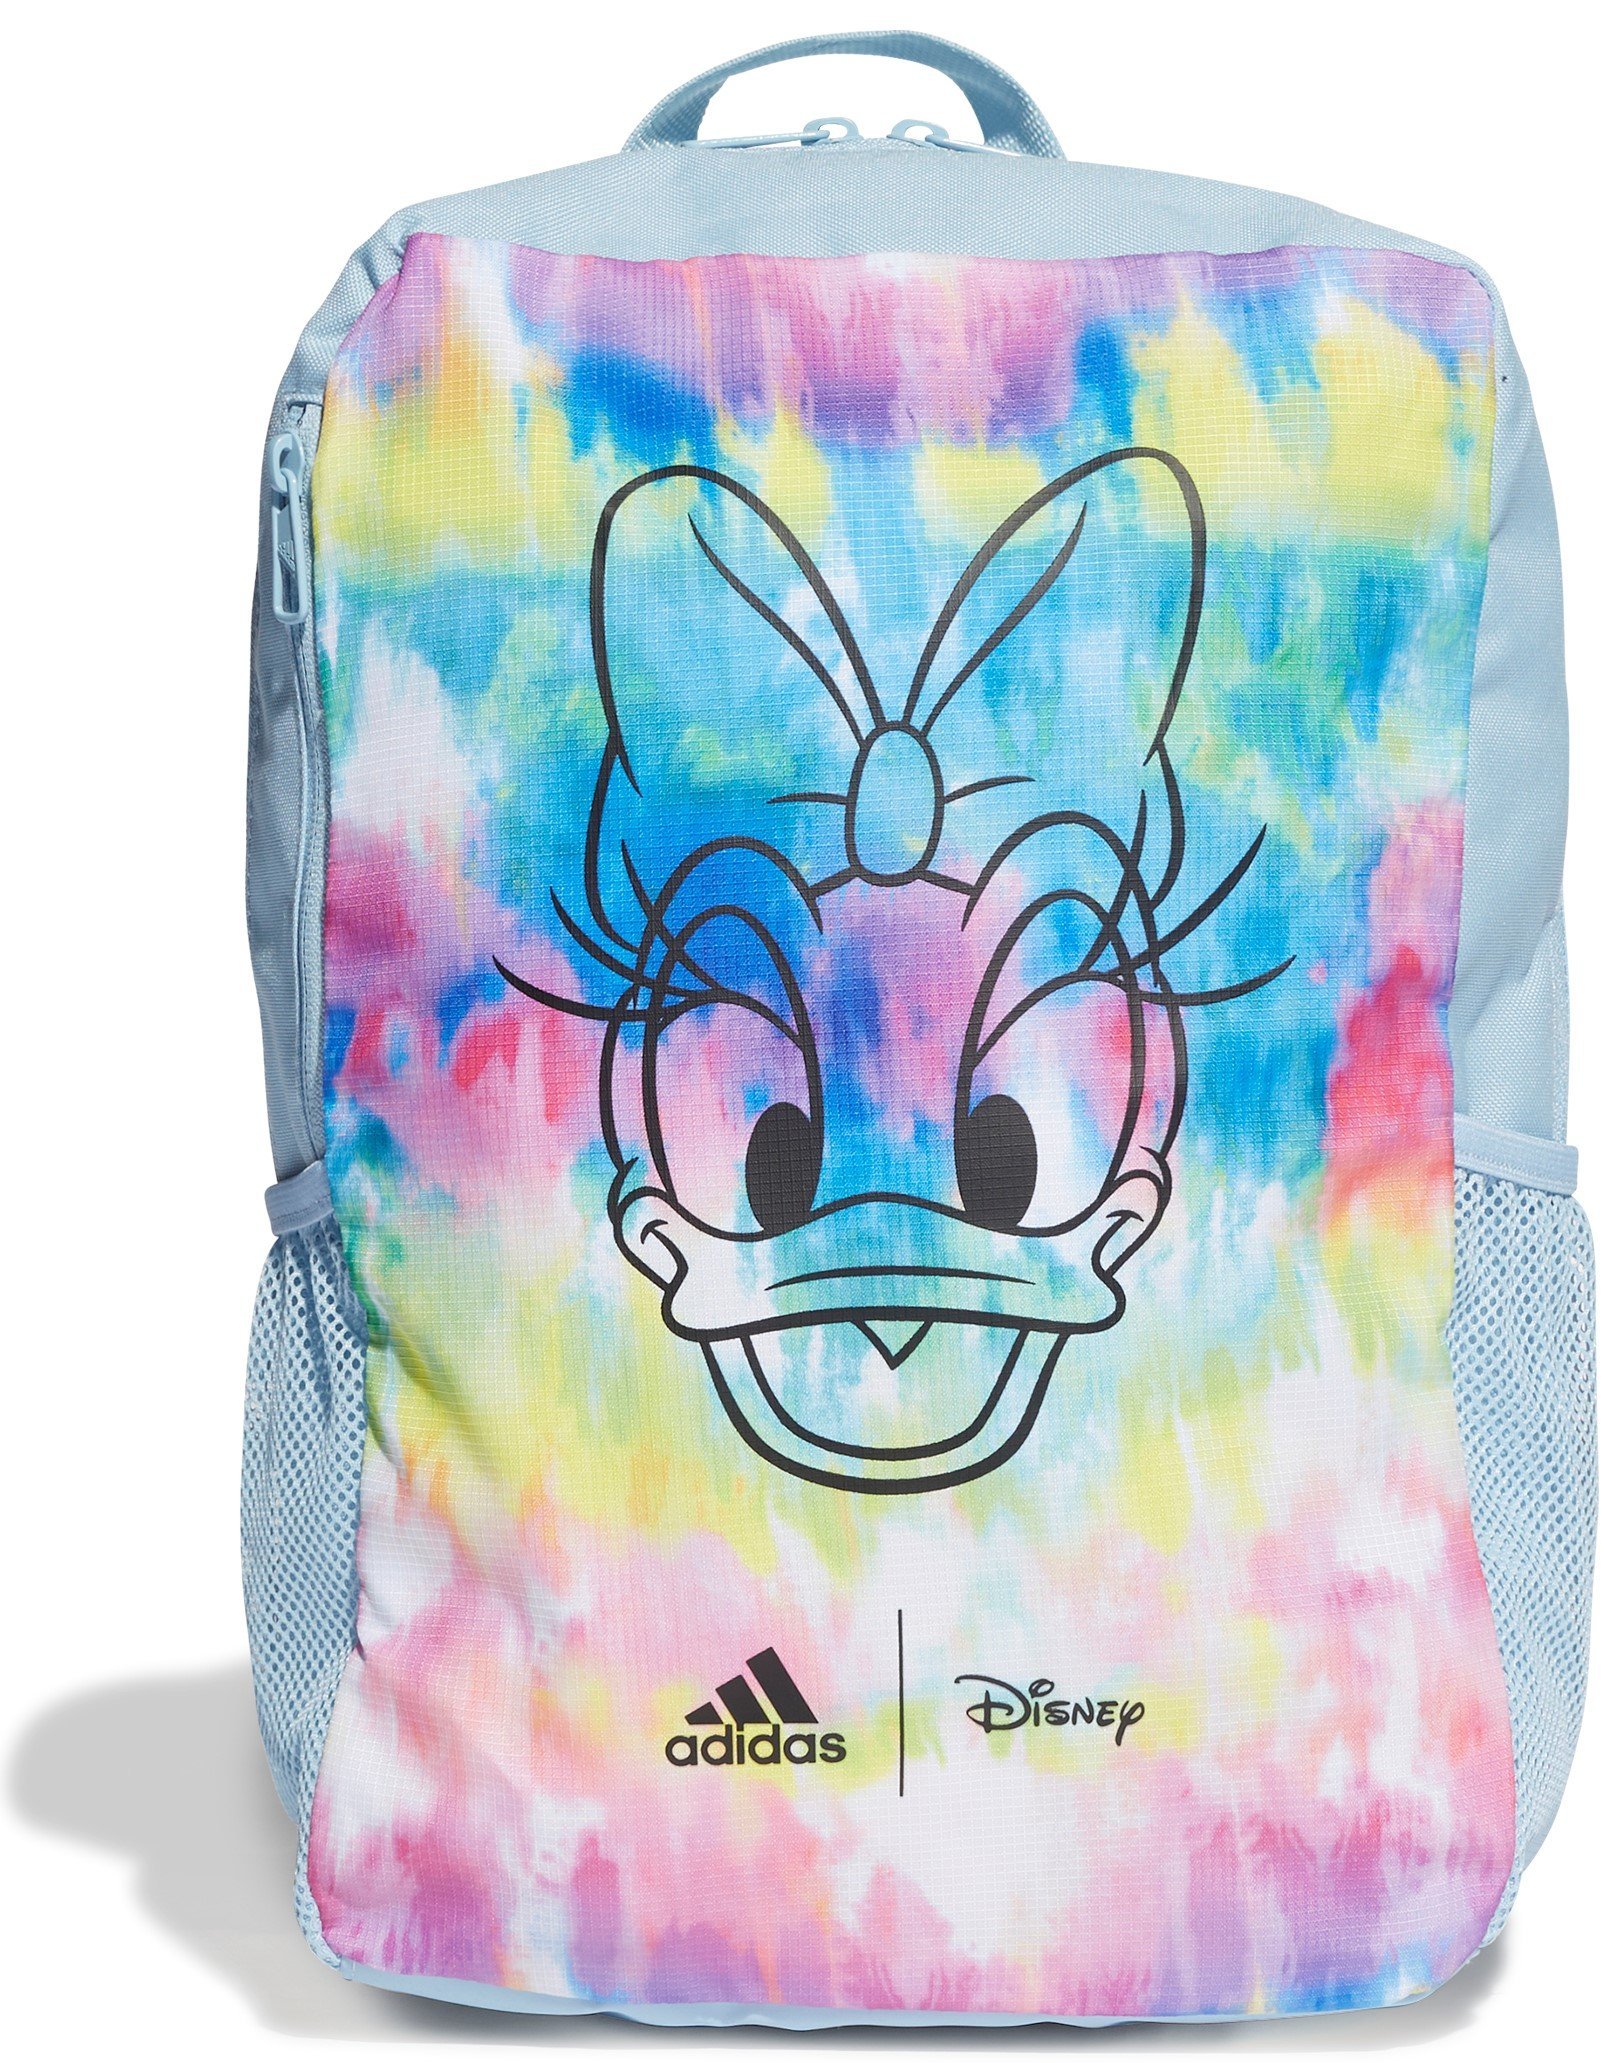 Adidas Disney Daisy